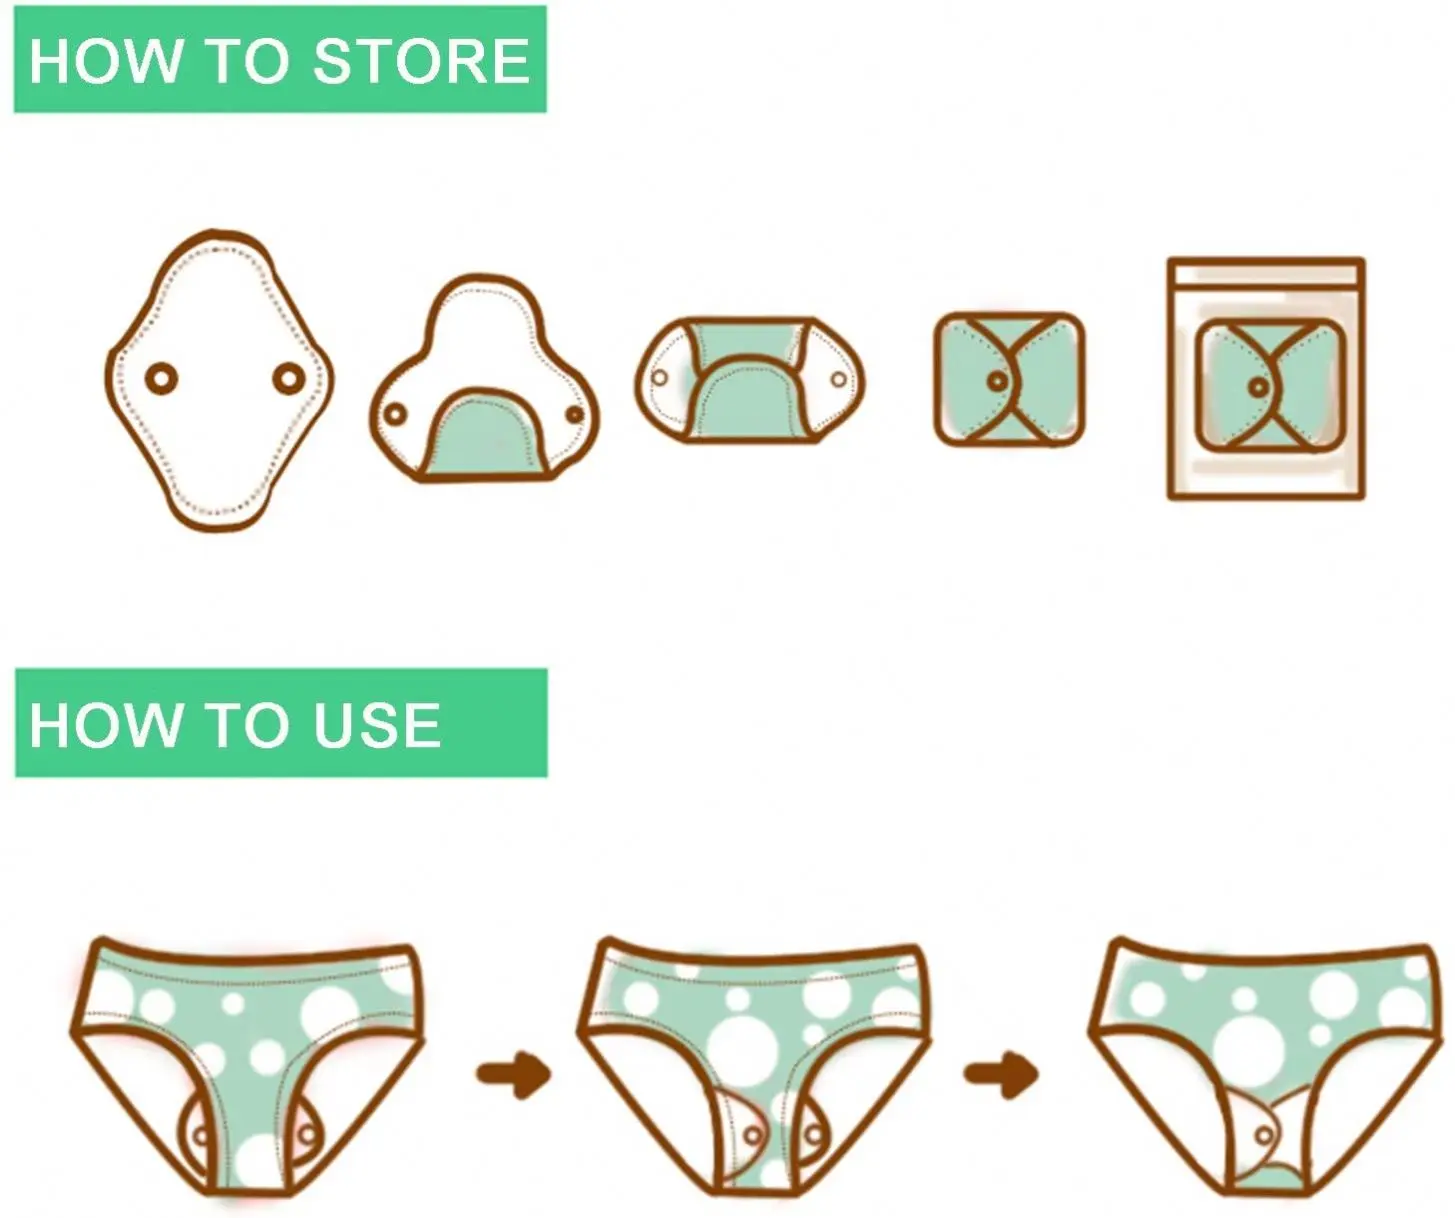 10pcs Sanitary Pad Menstrual Pads Panty Liners Reusable Washable Cloth Ladies Super Absorbent 10